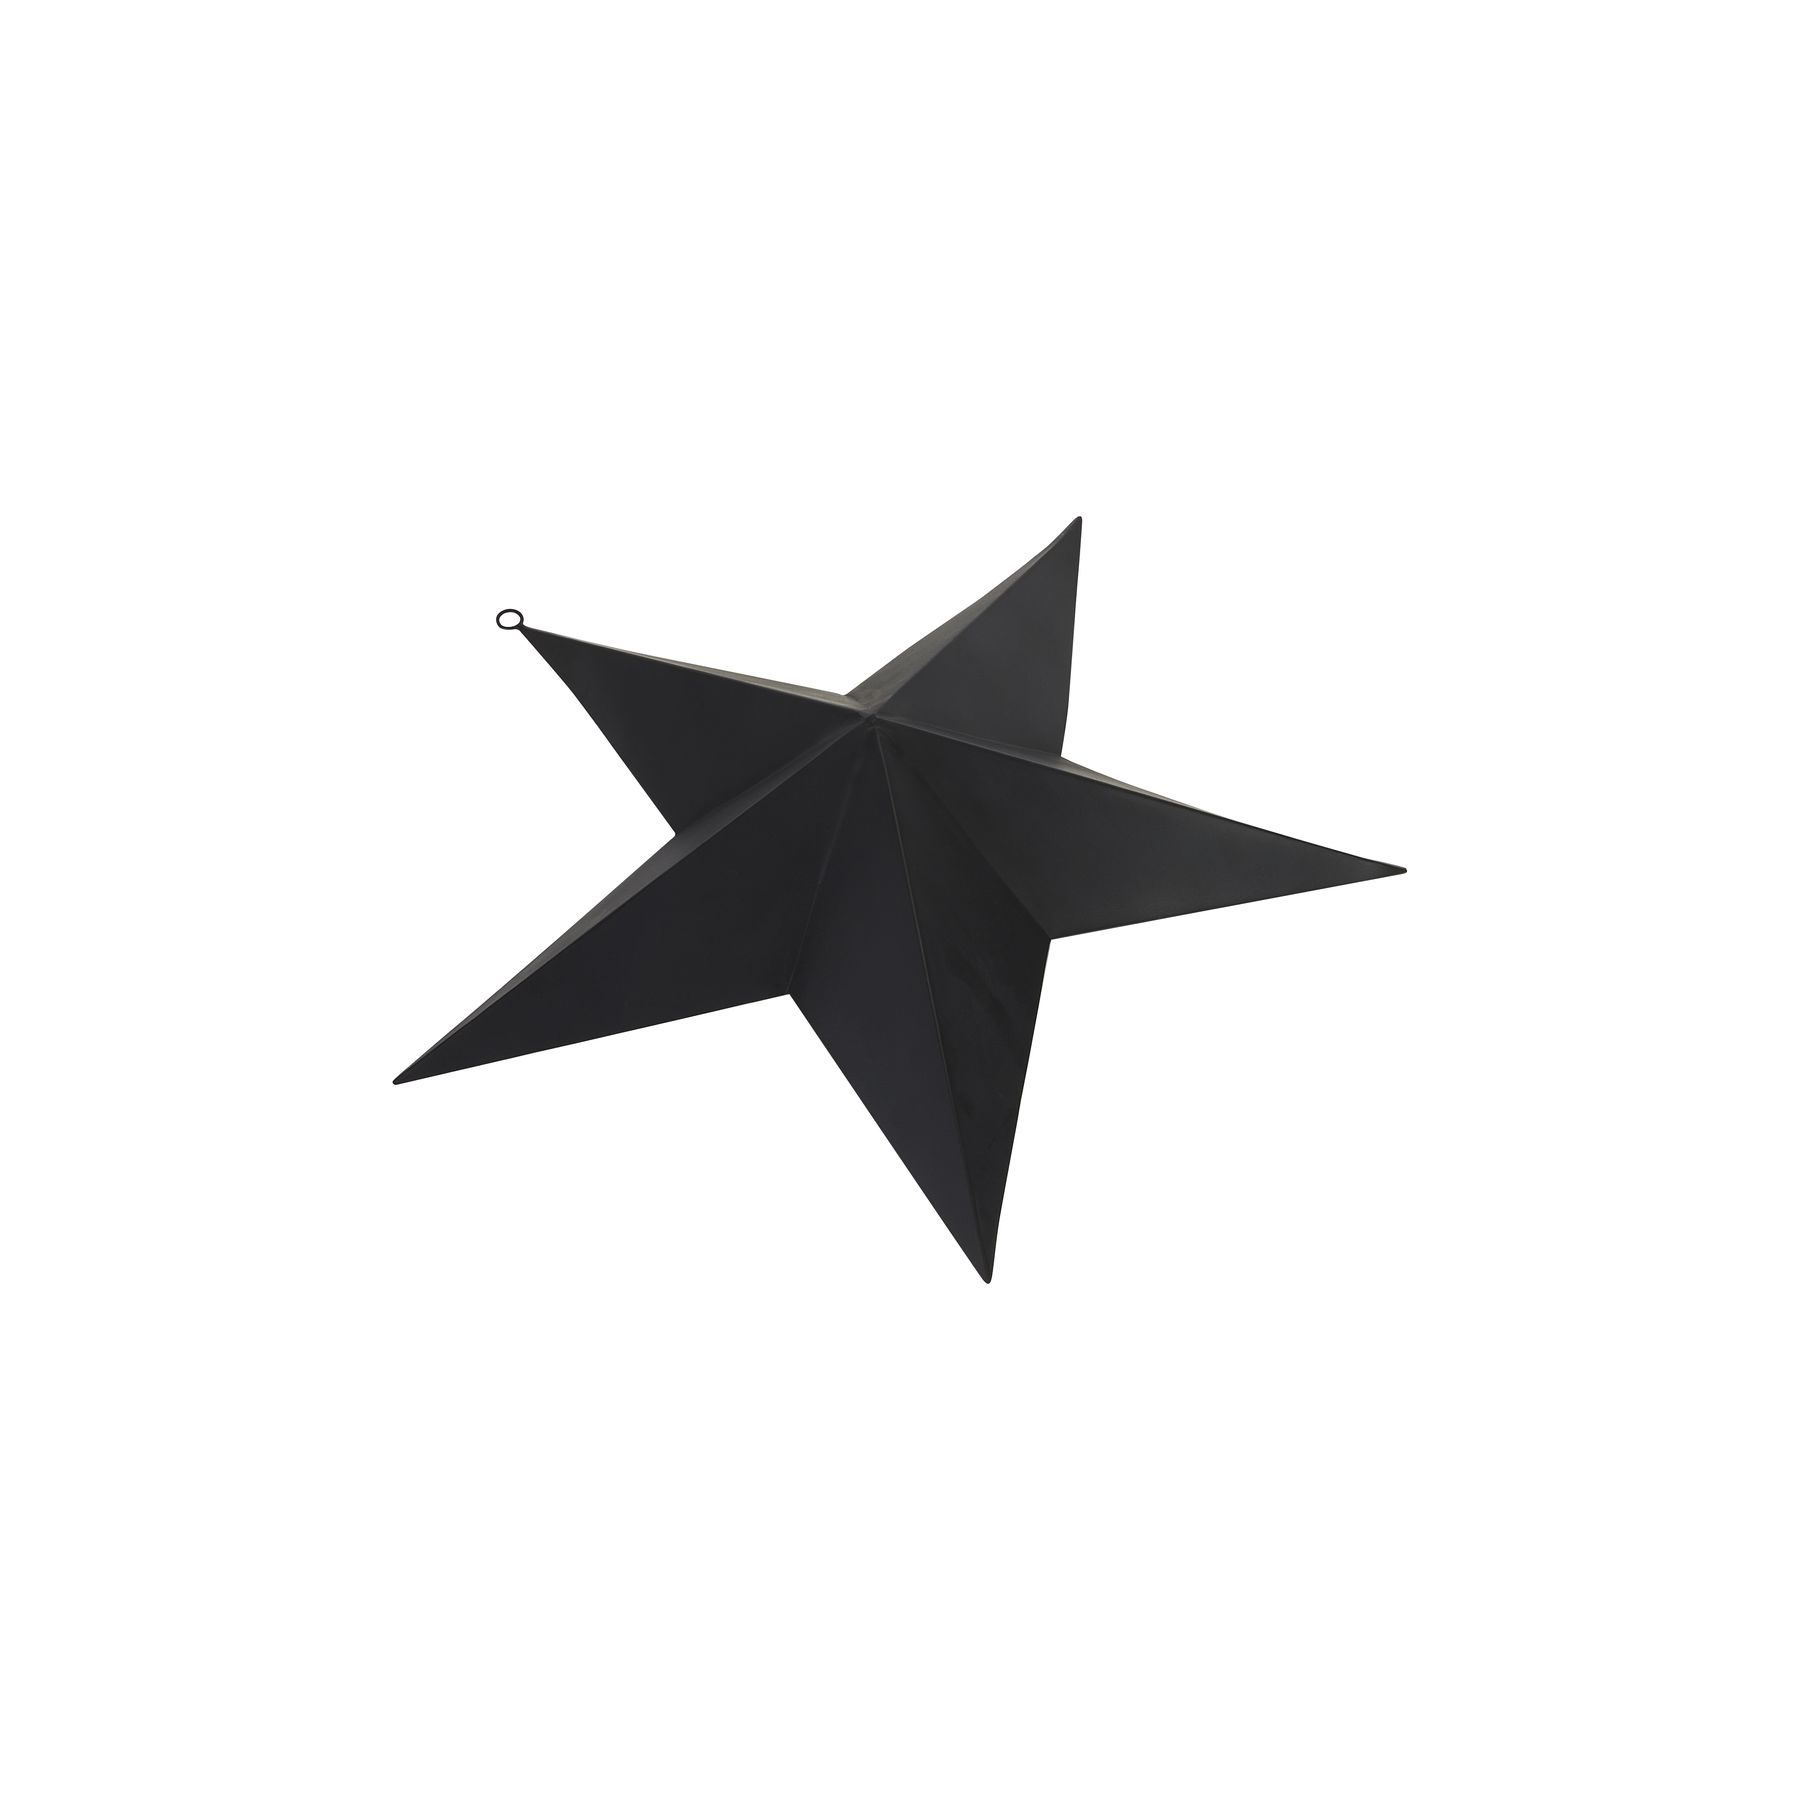 Matt Black Convexed Large Star - Image 1